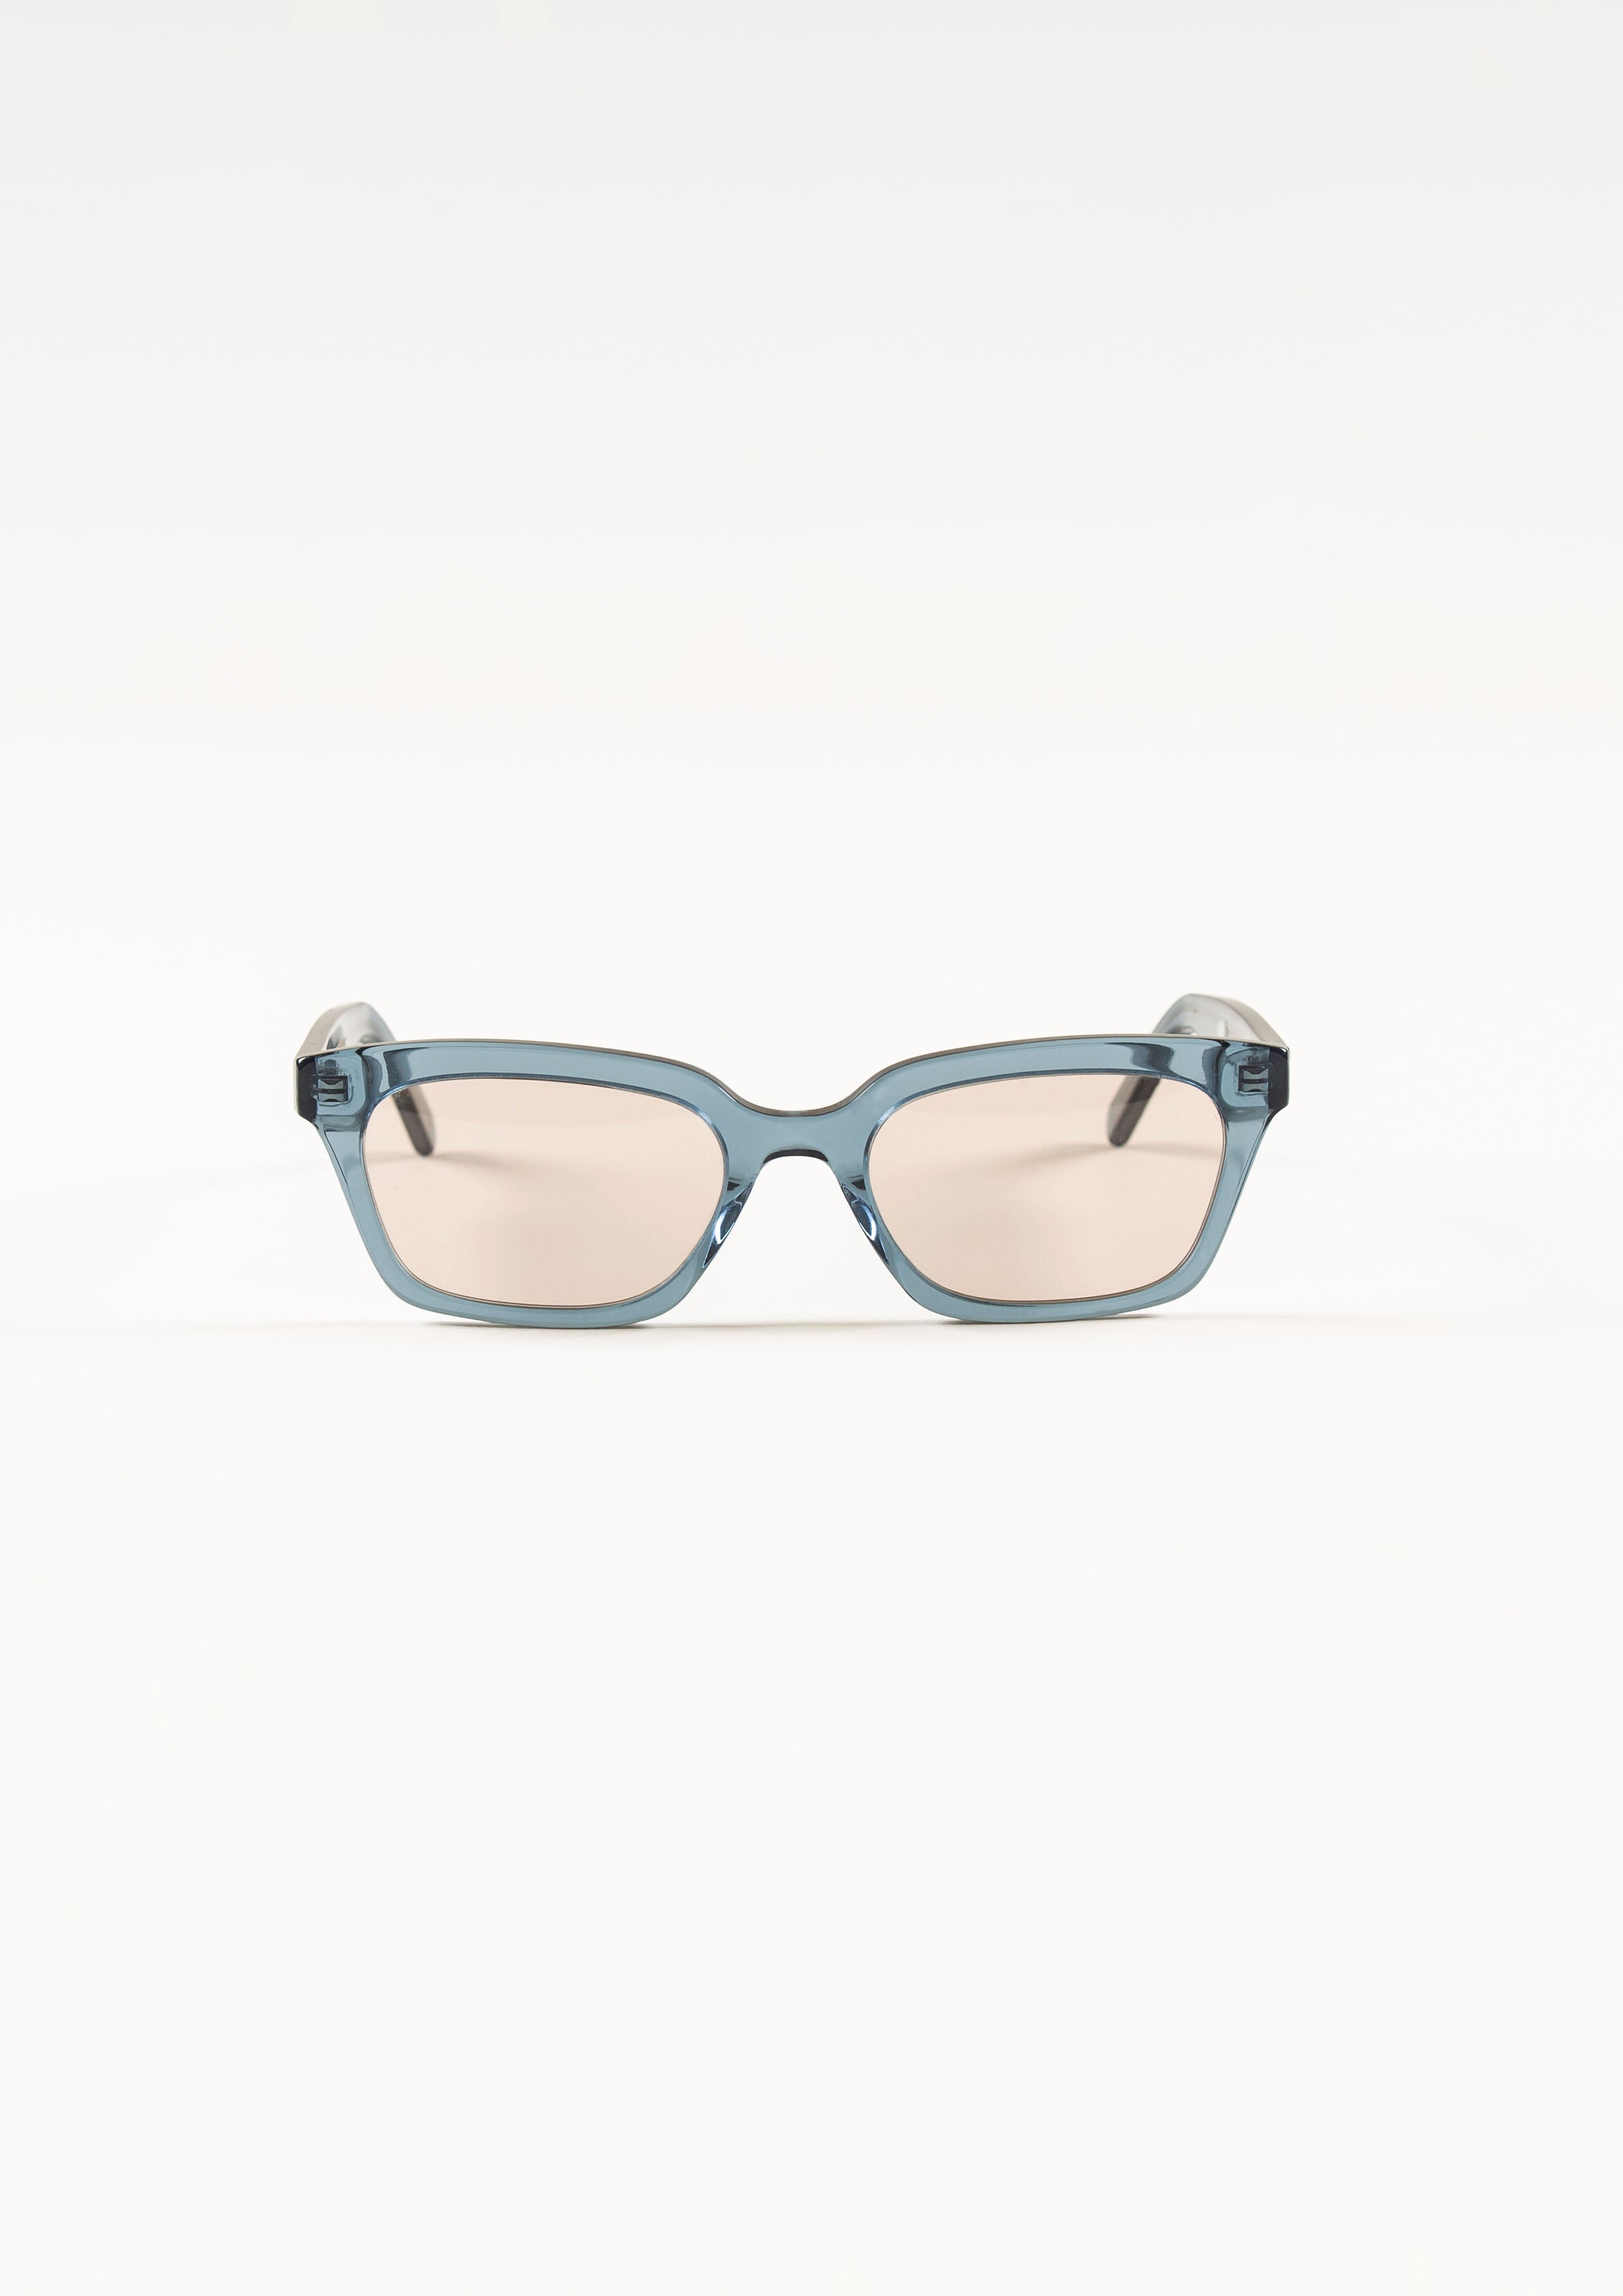 Trapani – Hydro Blue – Manushi Eyewear